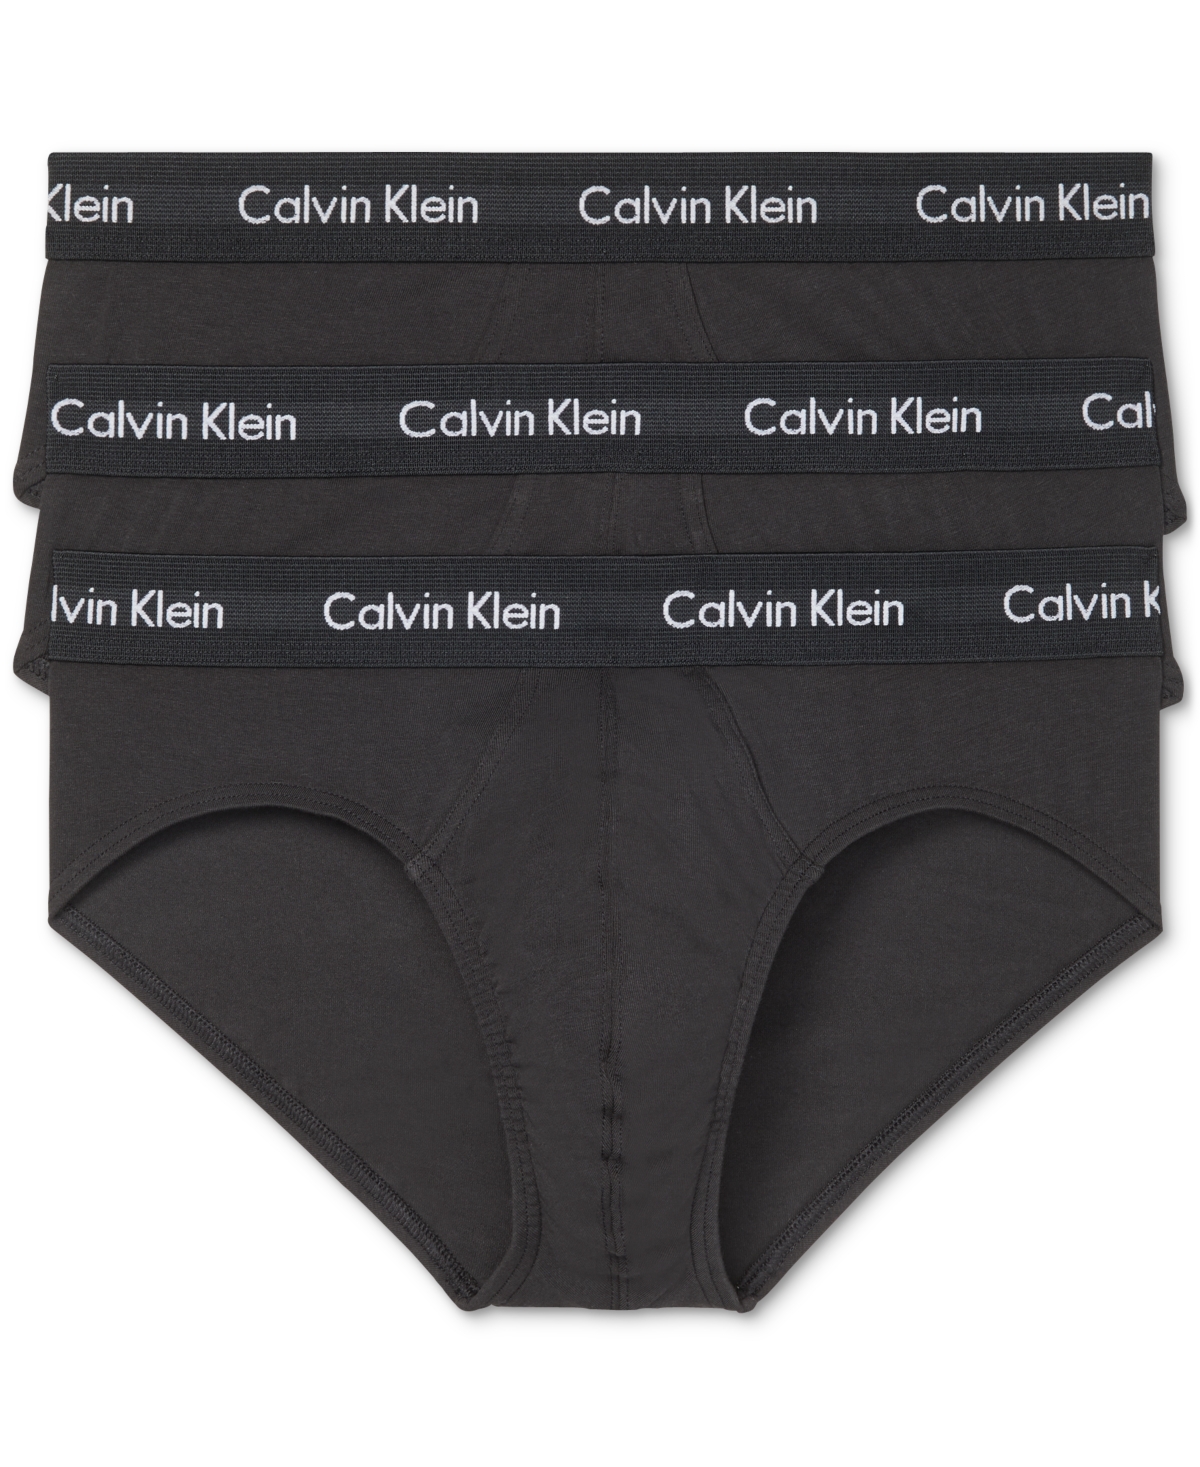 UPC 790812270547 product image for Calvin Klein Men's 3-Pack Cotton Stretch Briefs Underwear | upcitemdb.com